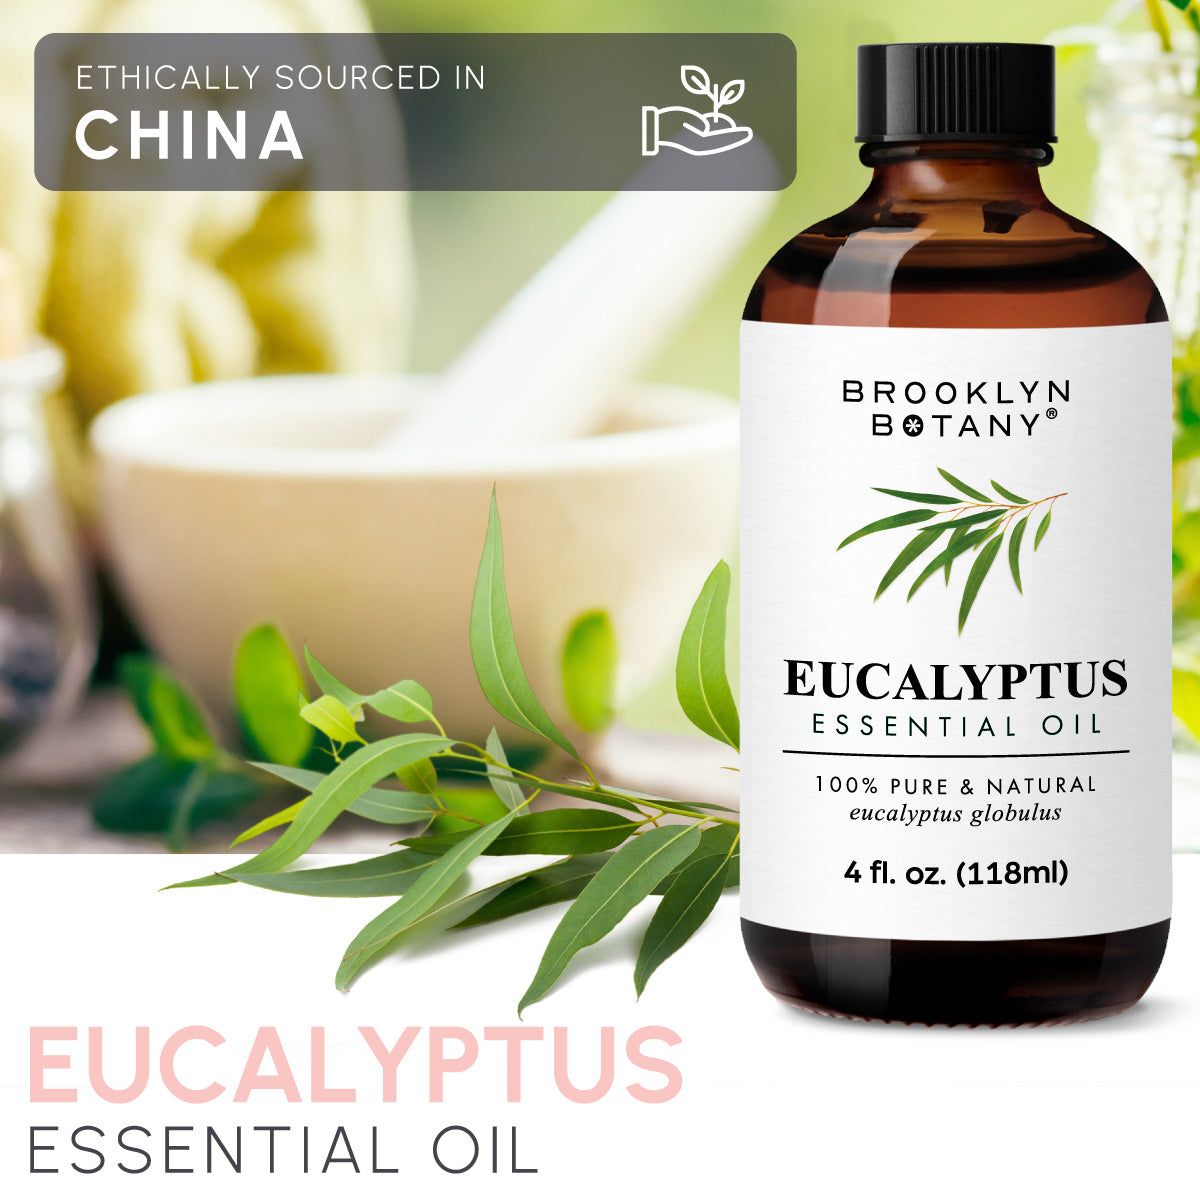 Now Eucalyptus Globulus Natural Eucalyptus Essential Oil